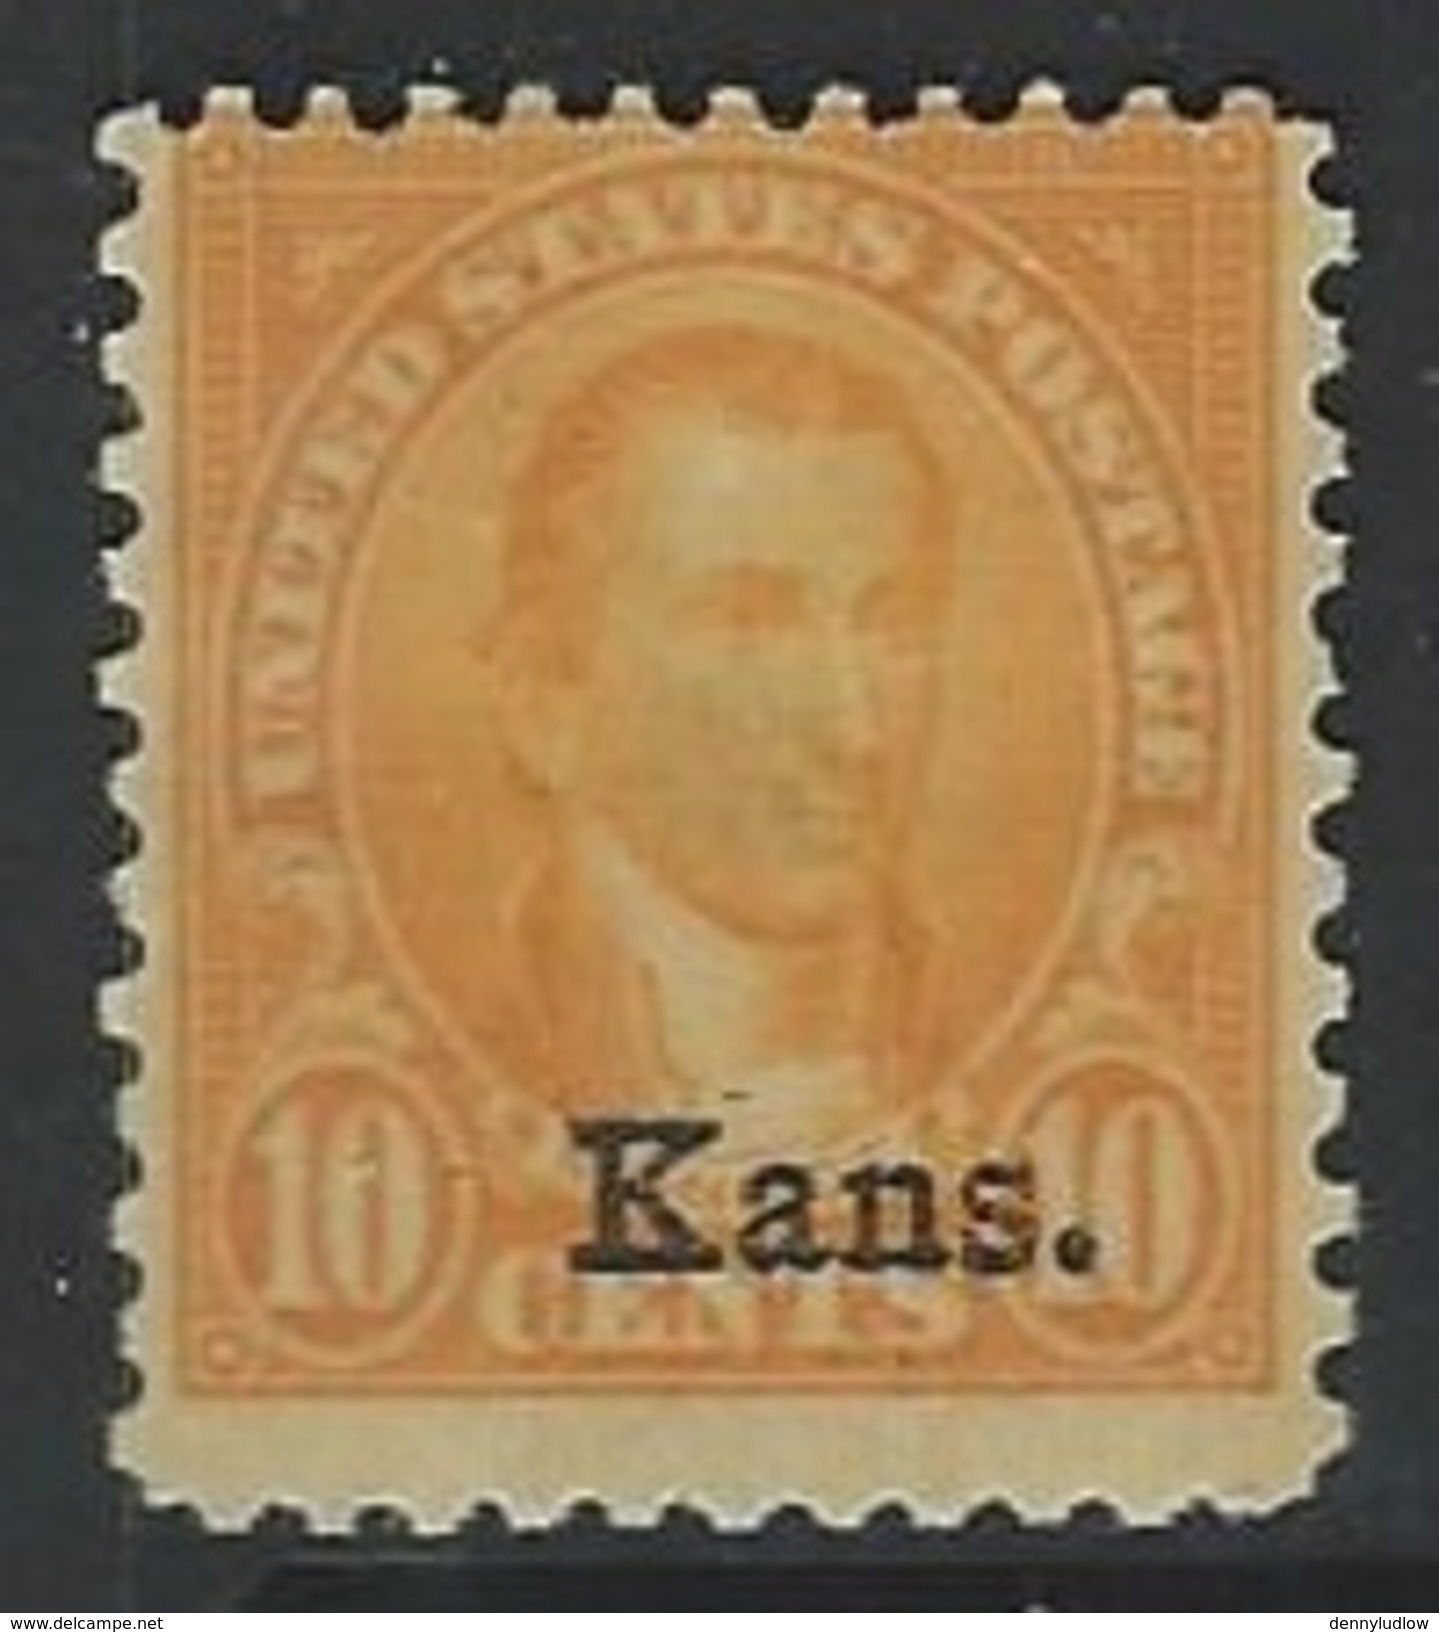 US  1929   Sc#668  10c  KANS Overprint  MLH*  2016 Scott Value $22.50 - Unused Stamps